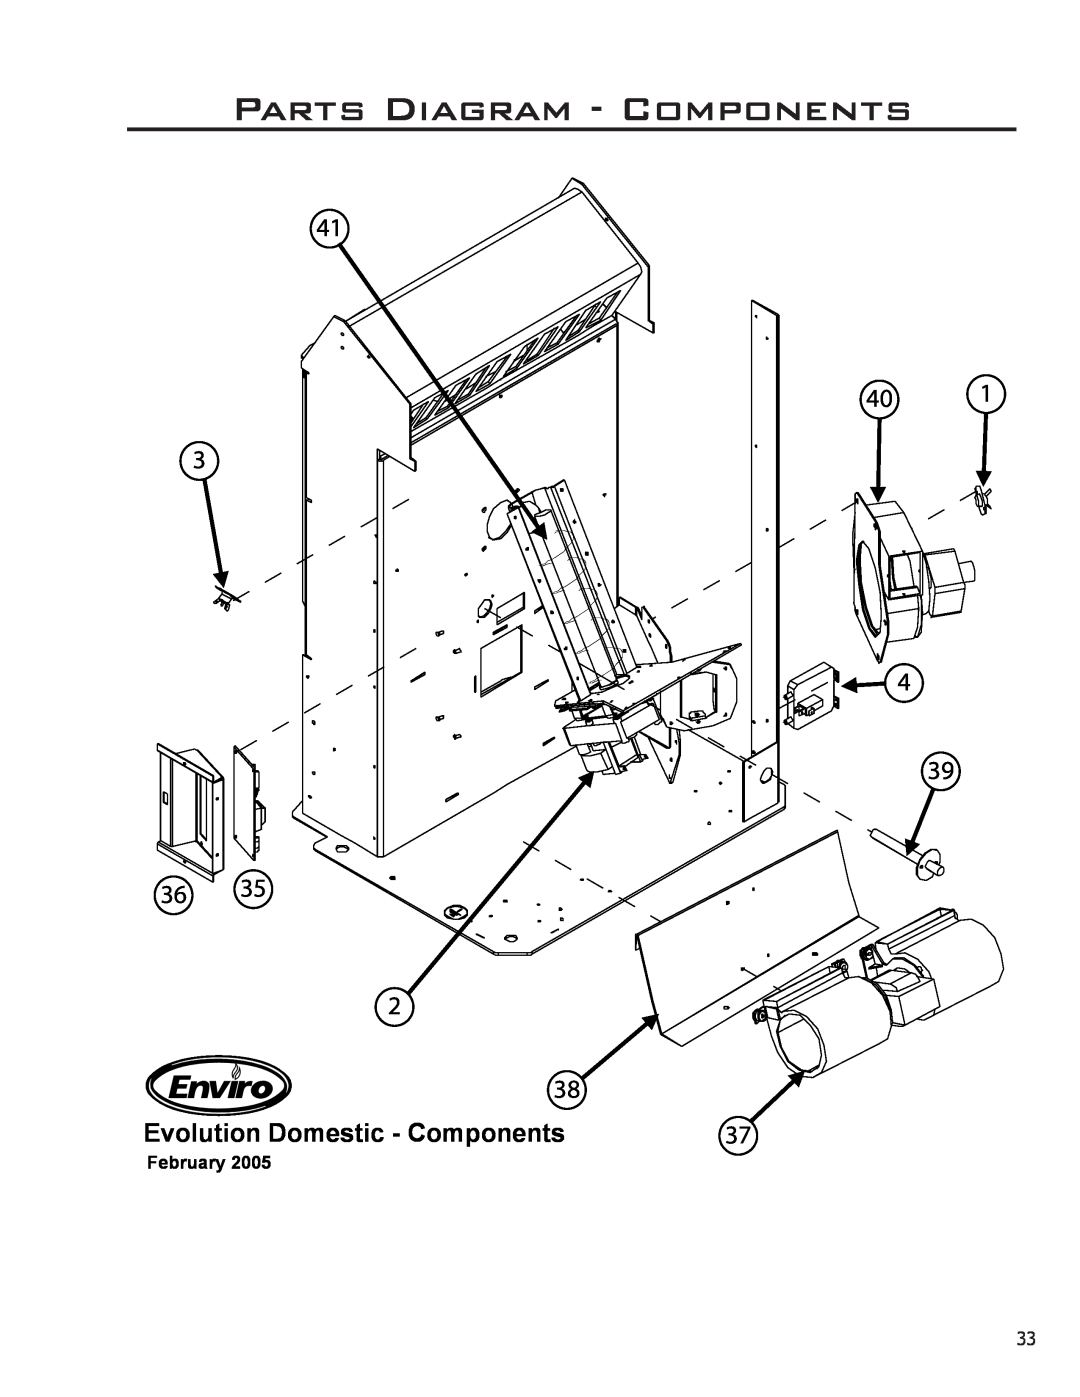 Enviro C-11023 owner manual Parts Diagram - Components, Evolution Domestic - Components, February 